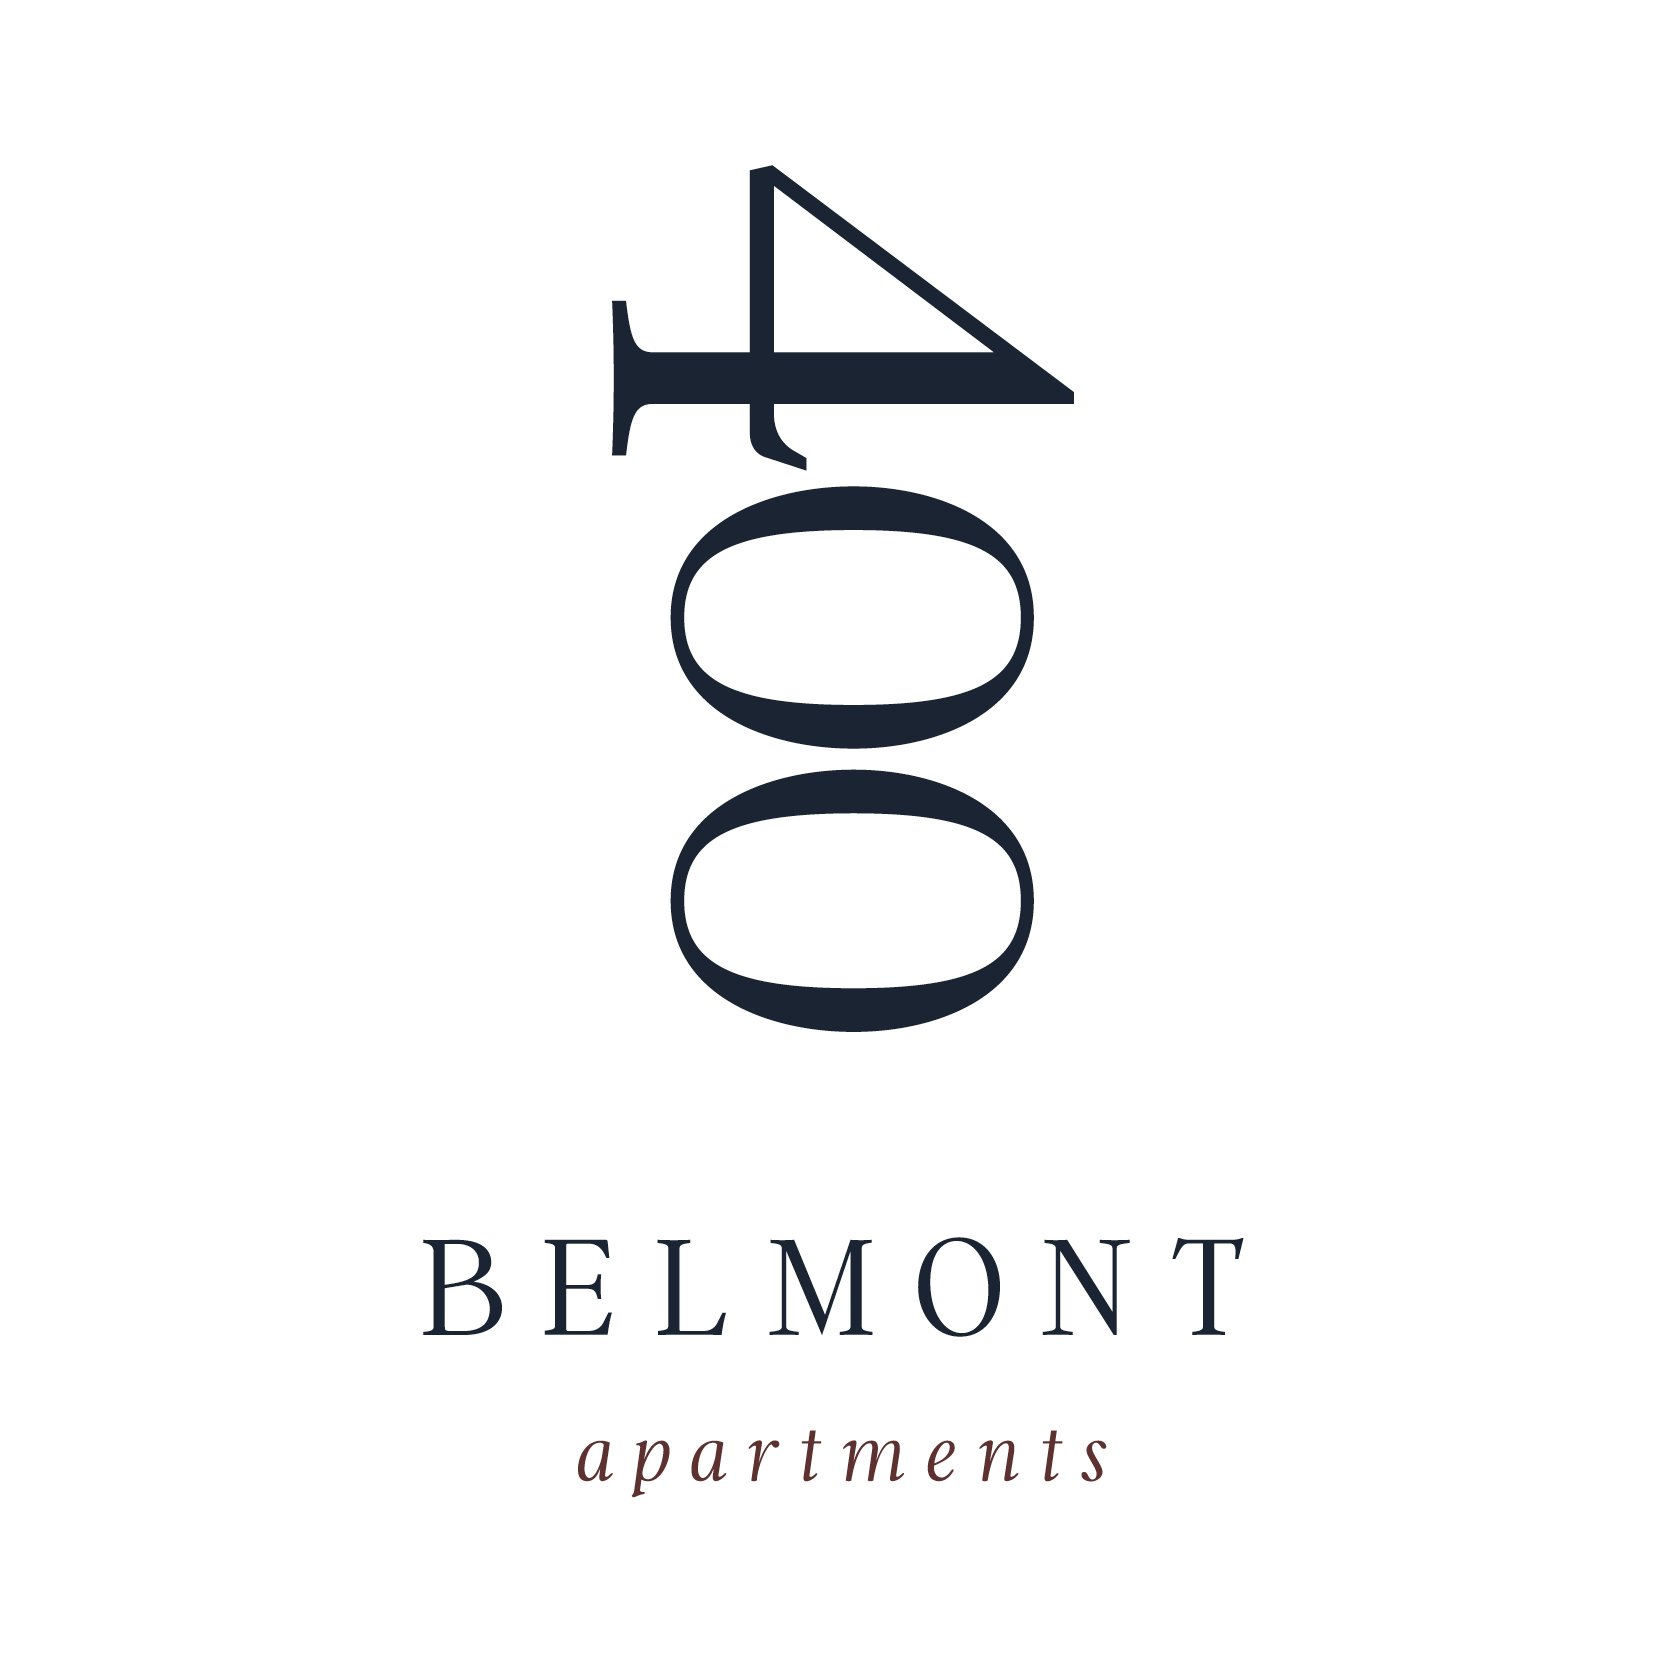 400 Belmont Apartments logo